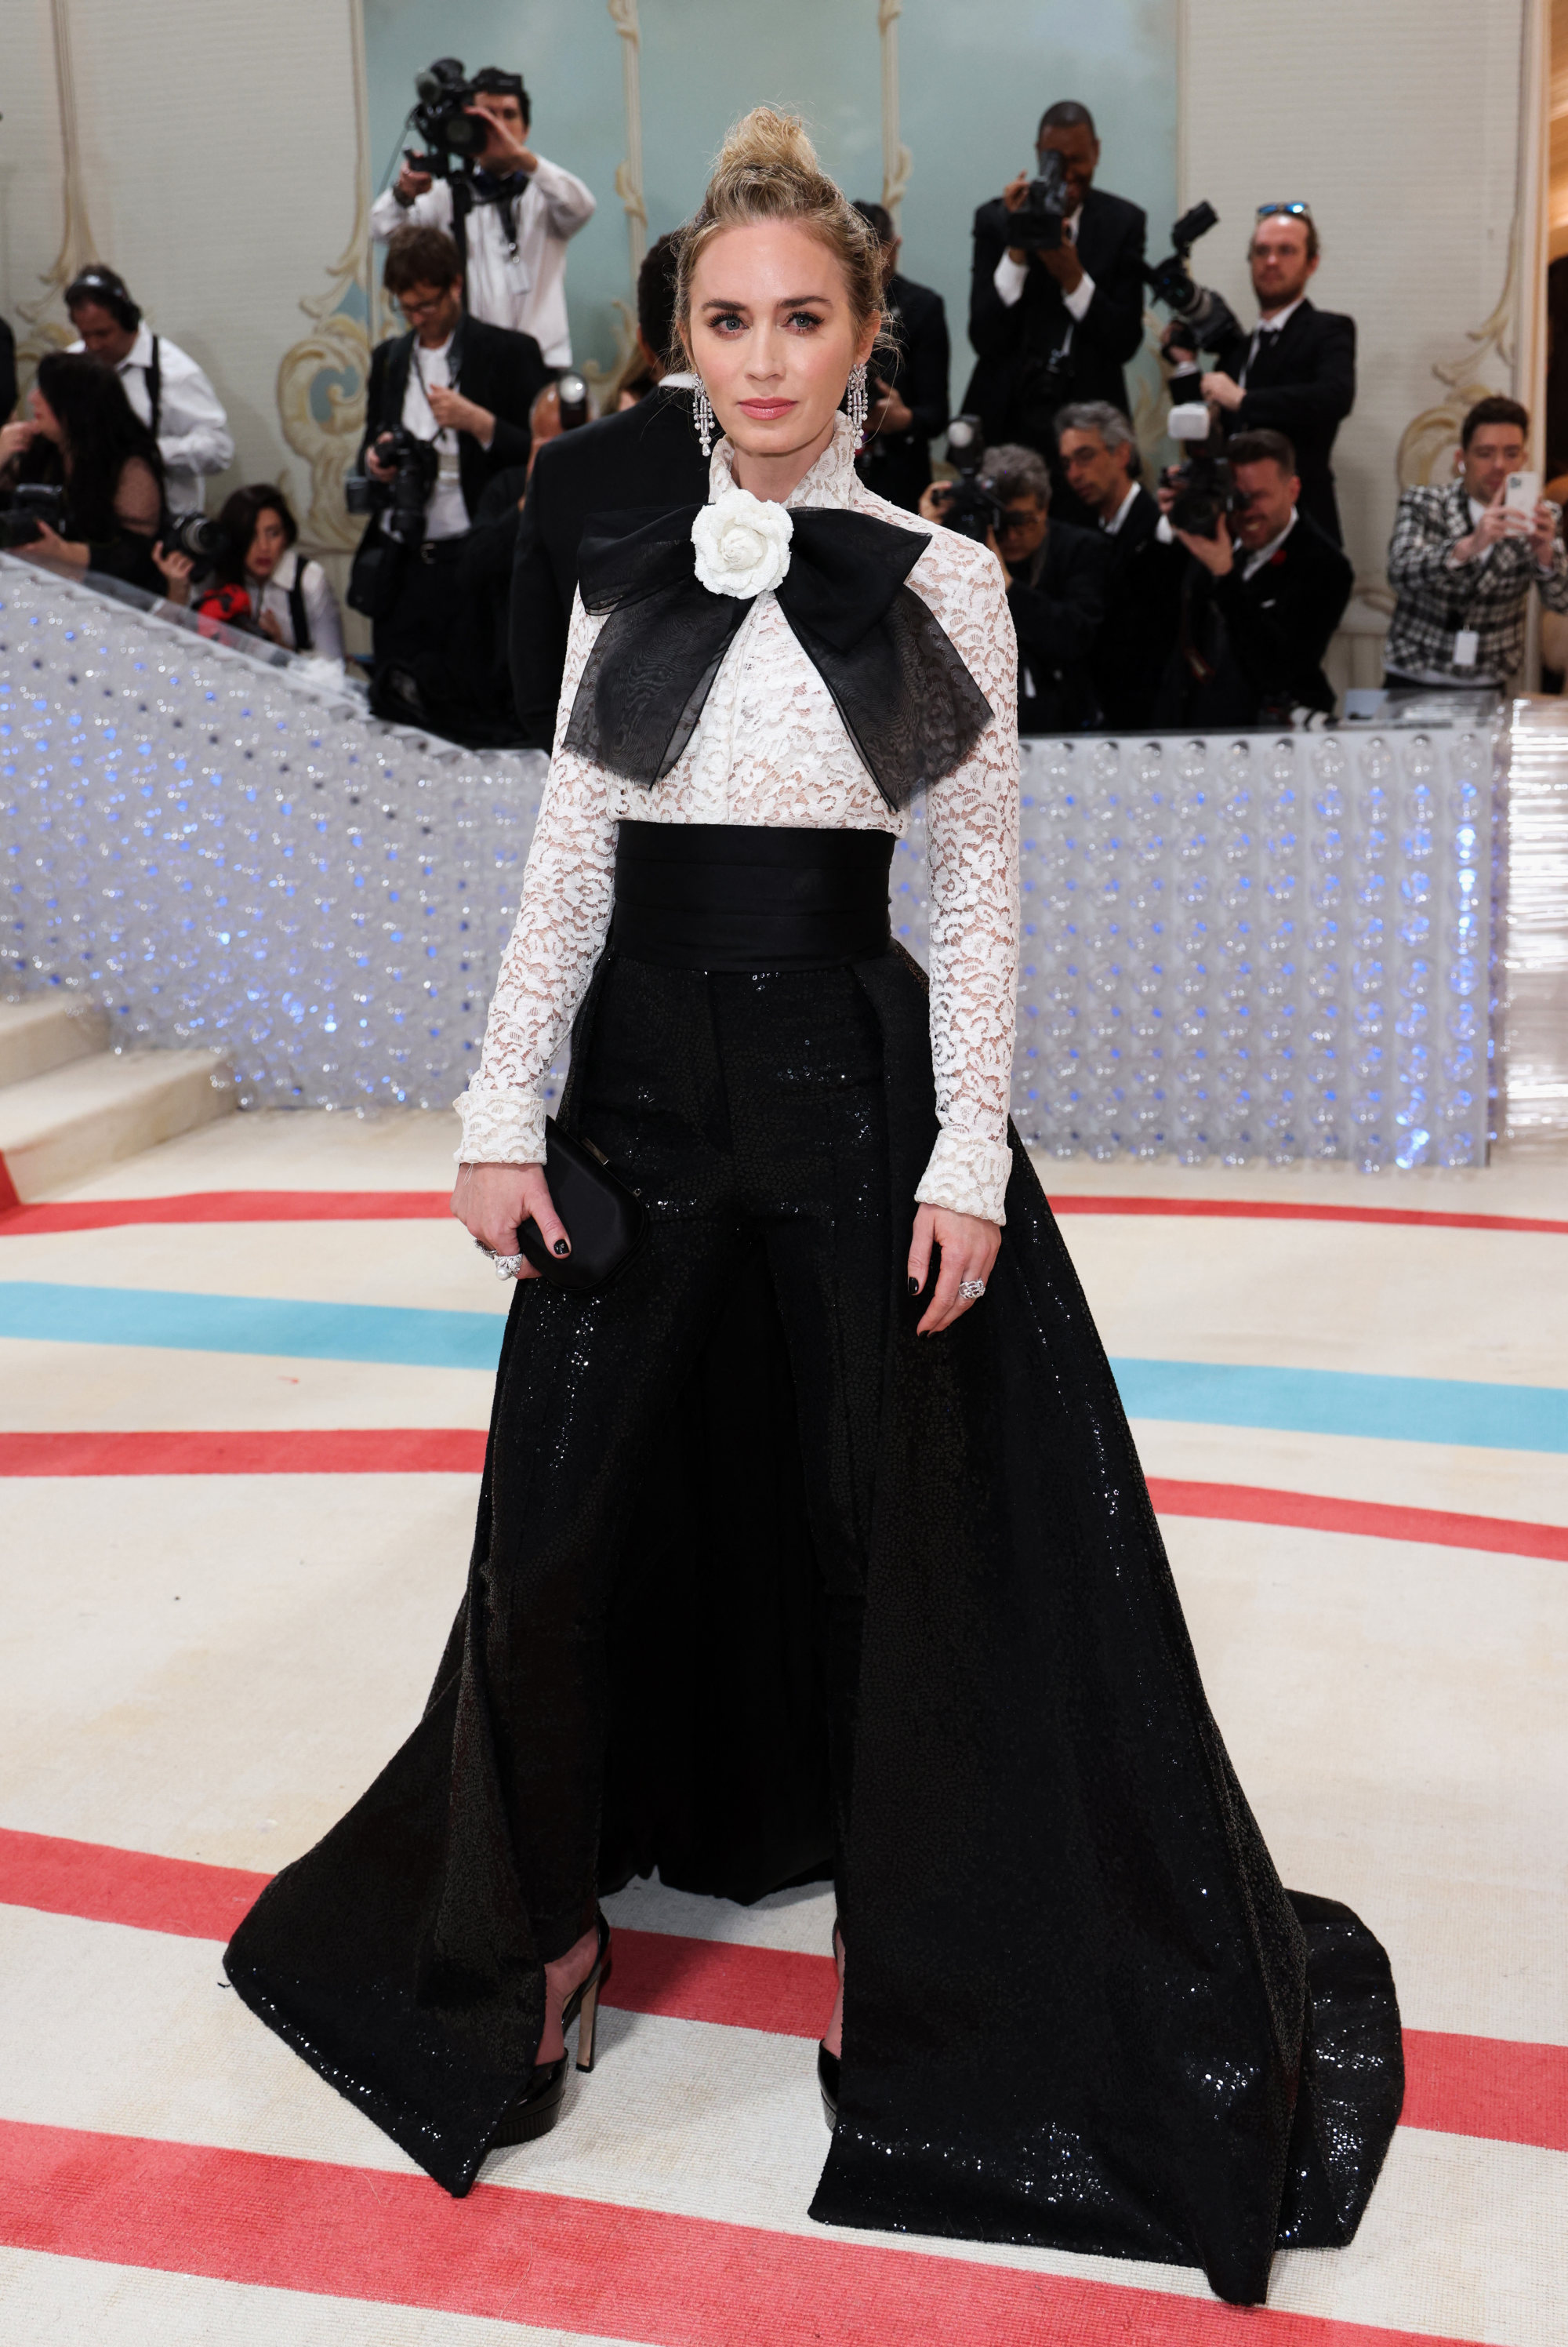 15 Karl Lagerfeld Designs We'd Like To See On The Met Gala Red Carpet